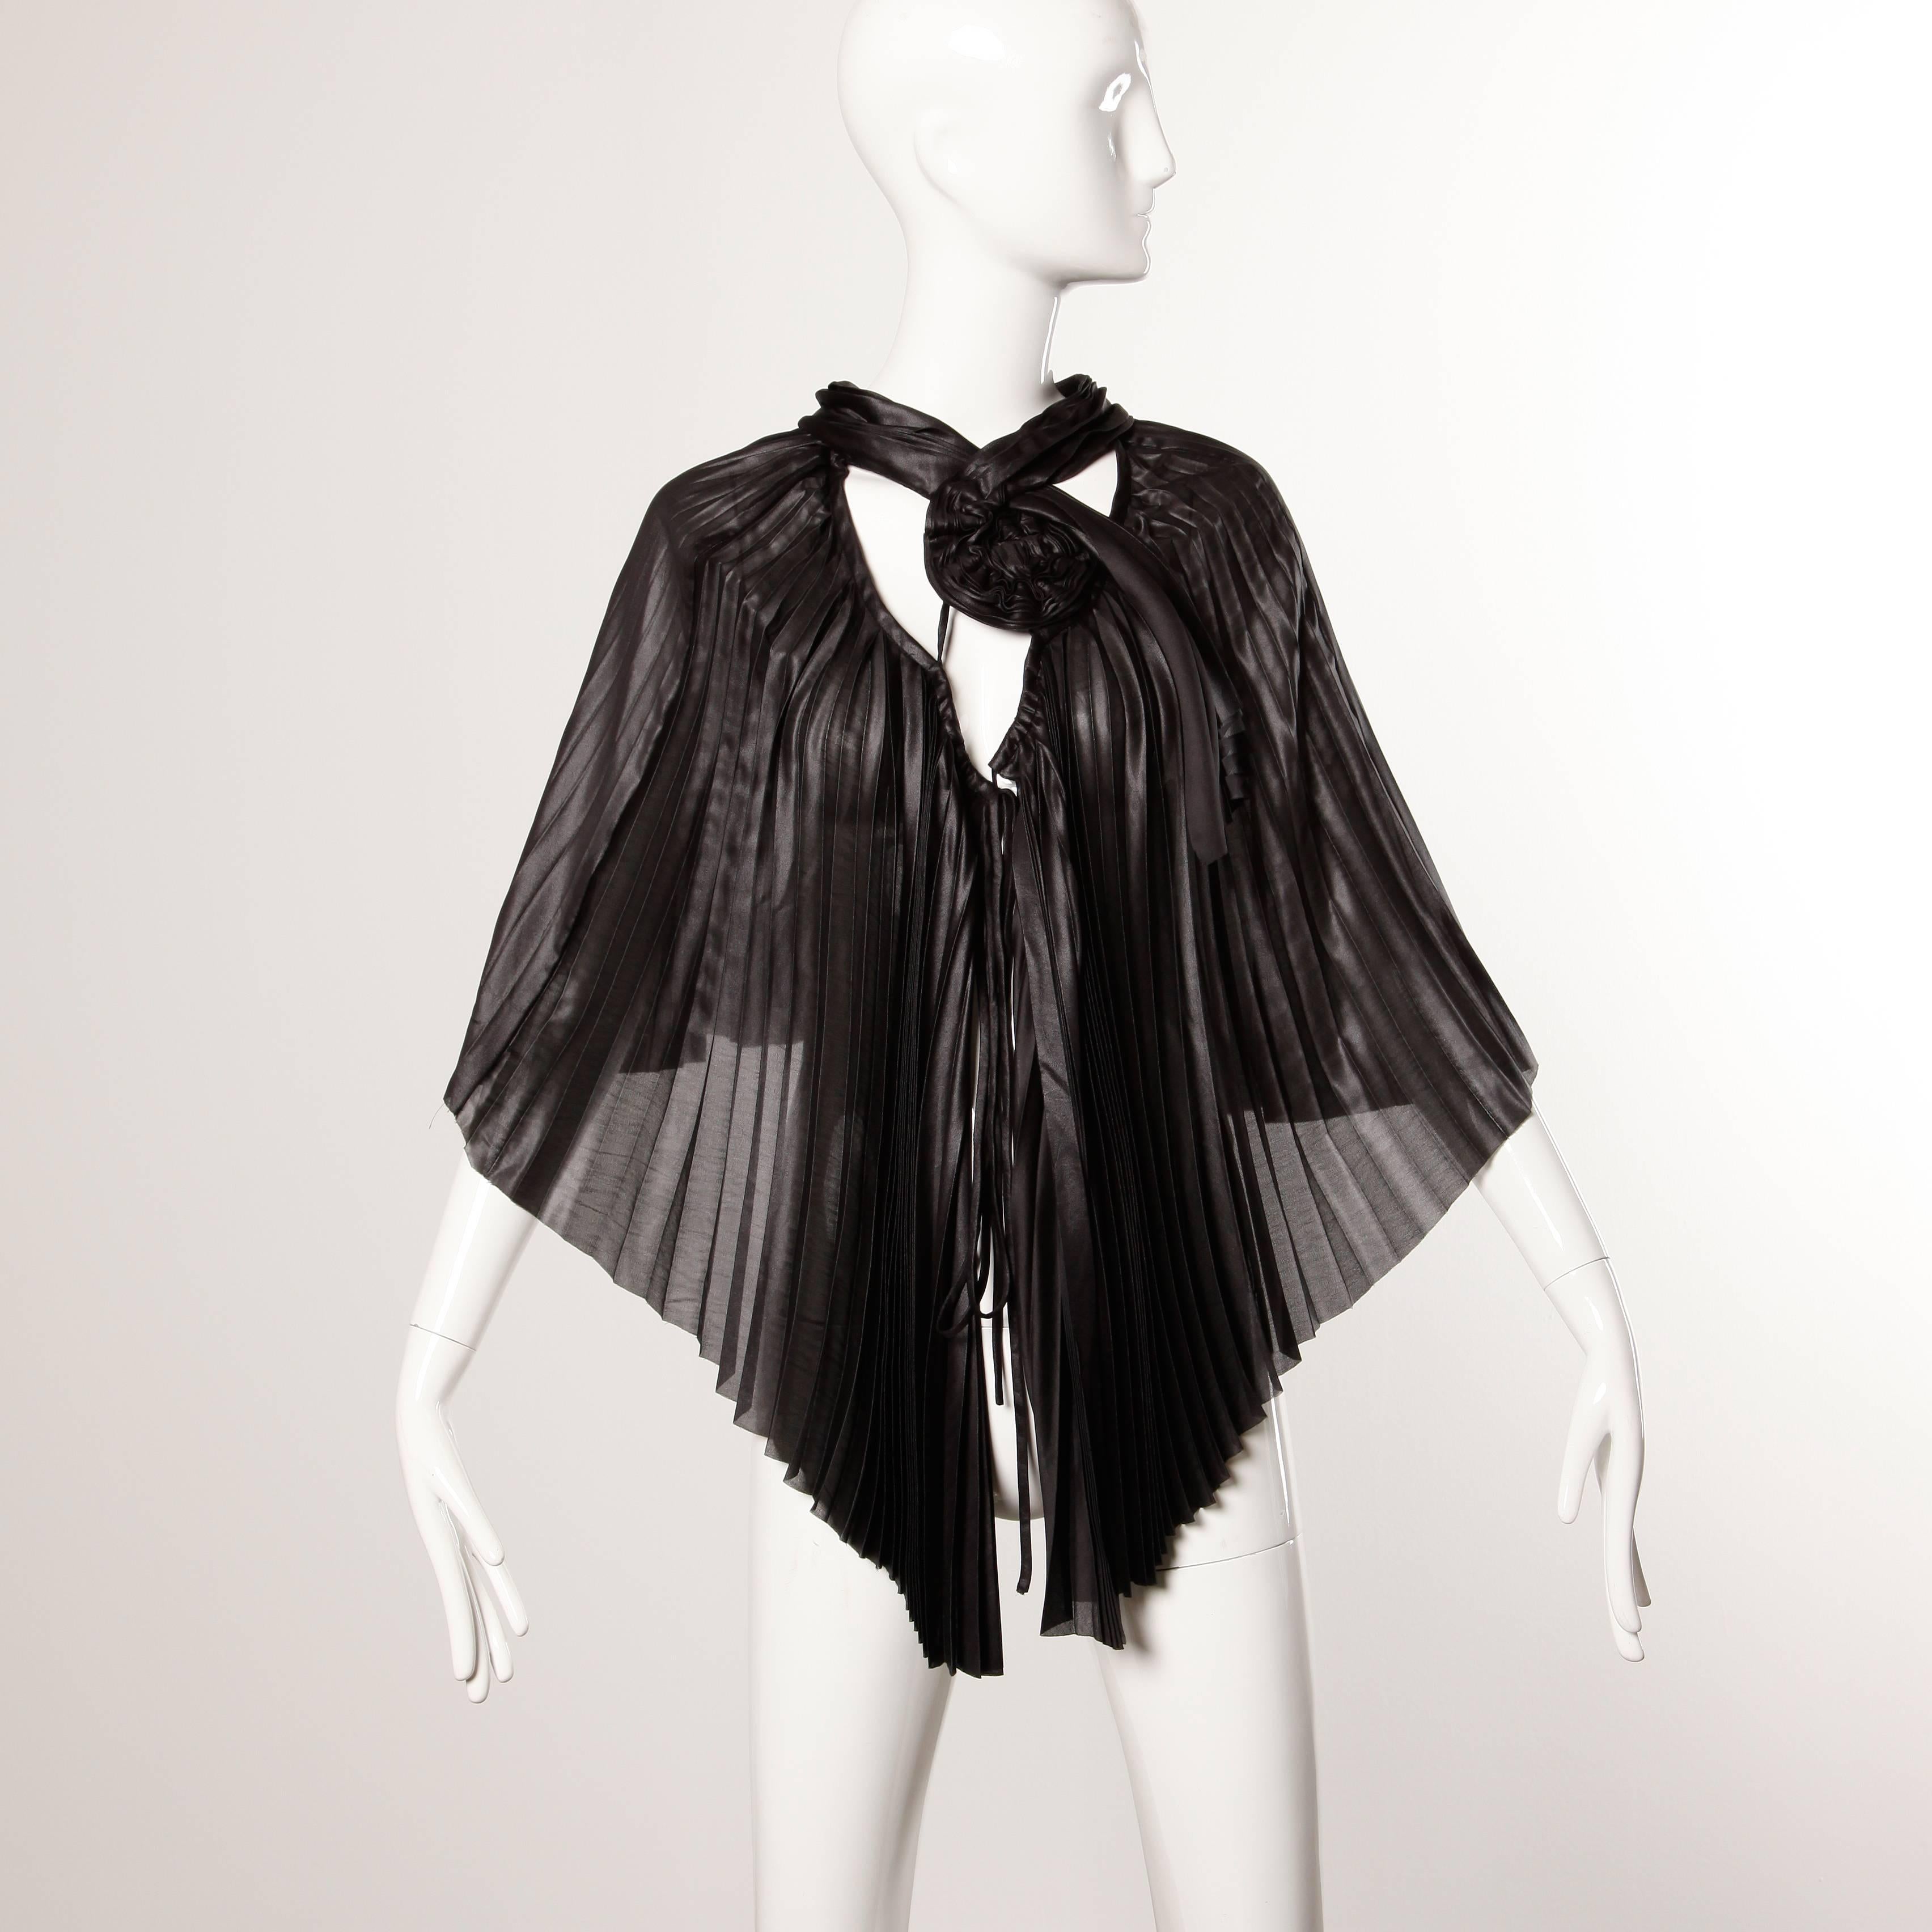 Issey Miyake Vintage Avant Garde Pleated Origami Black Cape Jacket or Tunic 1